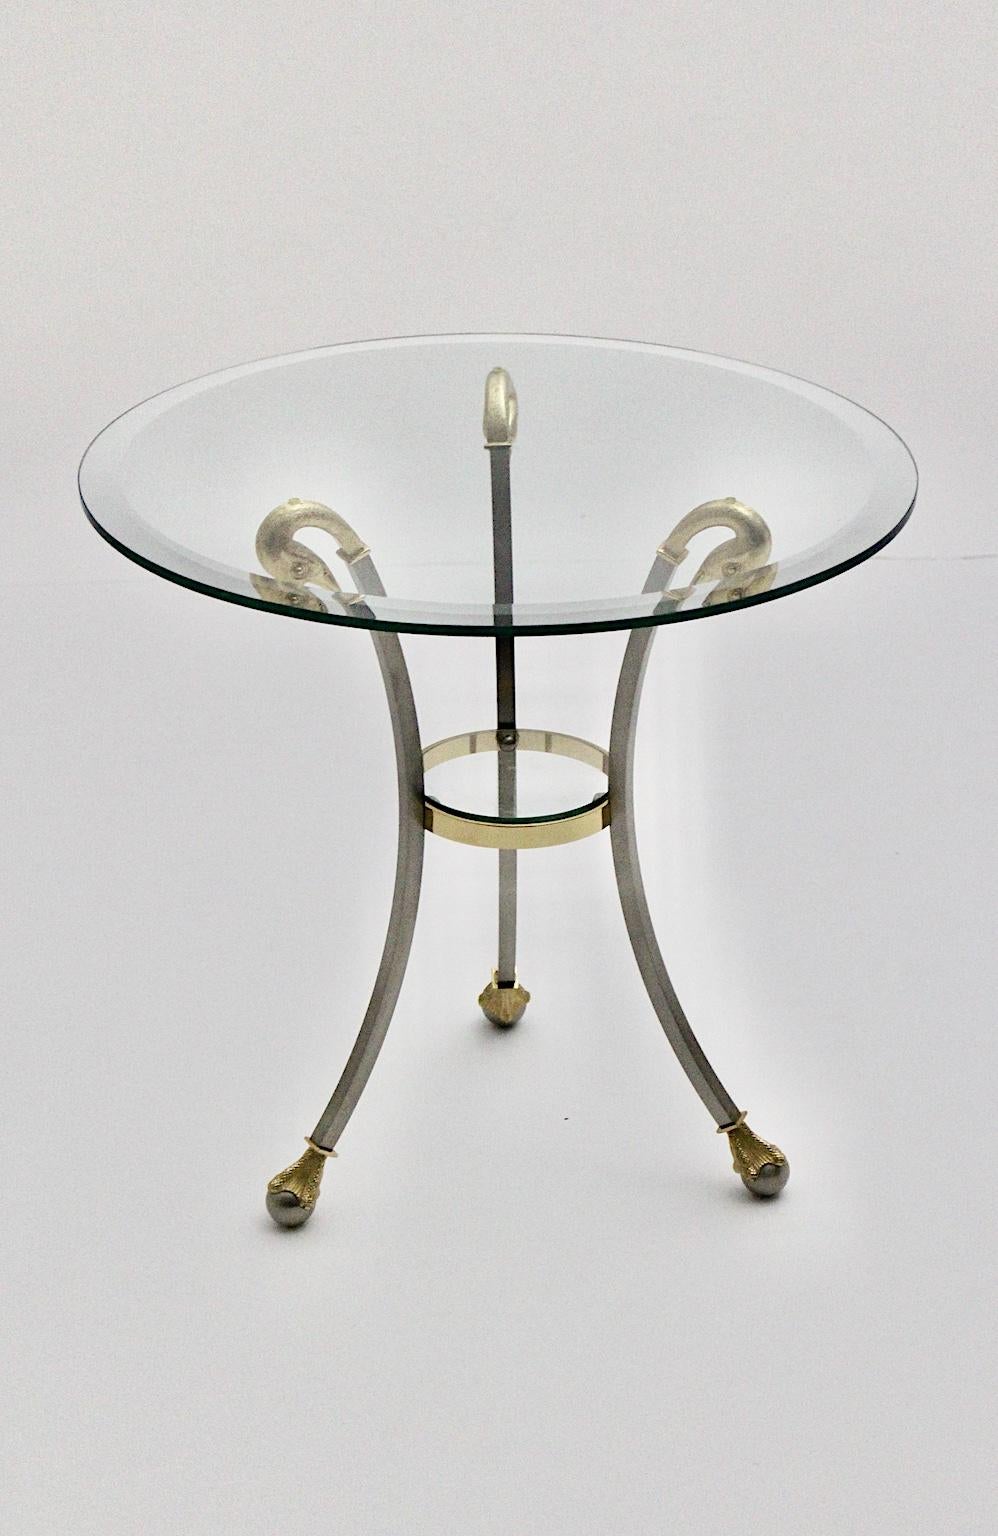 20th Century Hollywood Regency Style Maison Jansen Gold Chrome Circular Side Table Sofa Table For Sale